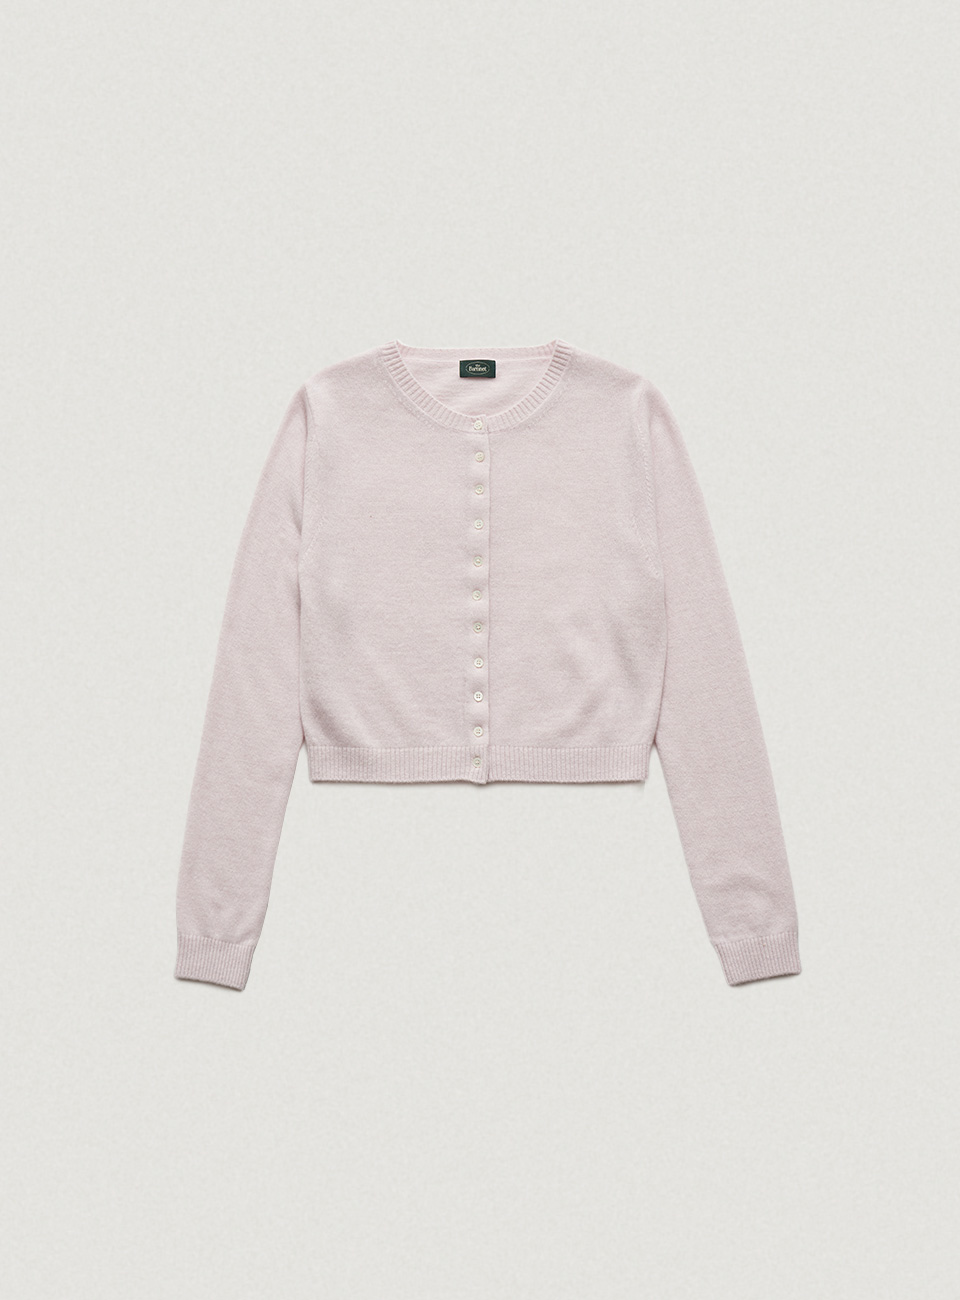 Pale Pink Classic Cropped Knit Cardigan[6월 중순 순차 배송]